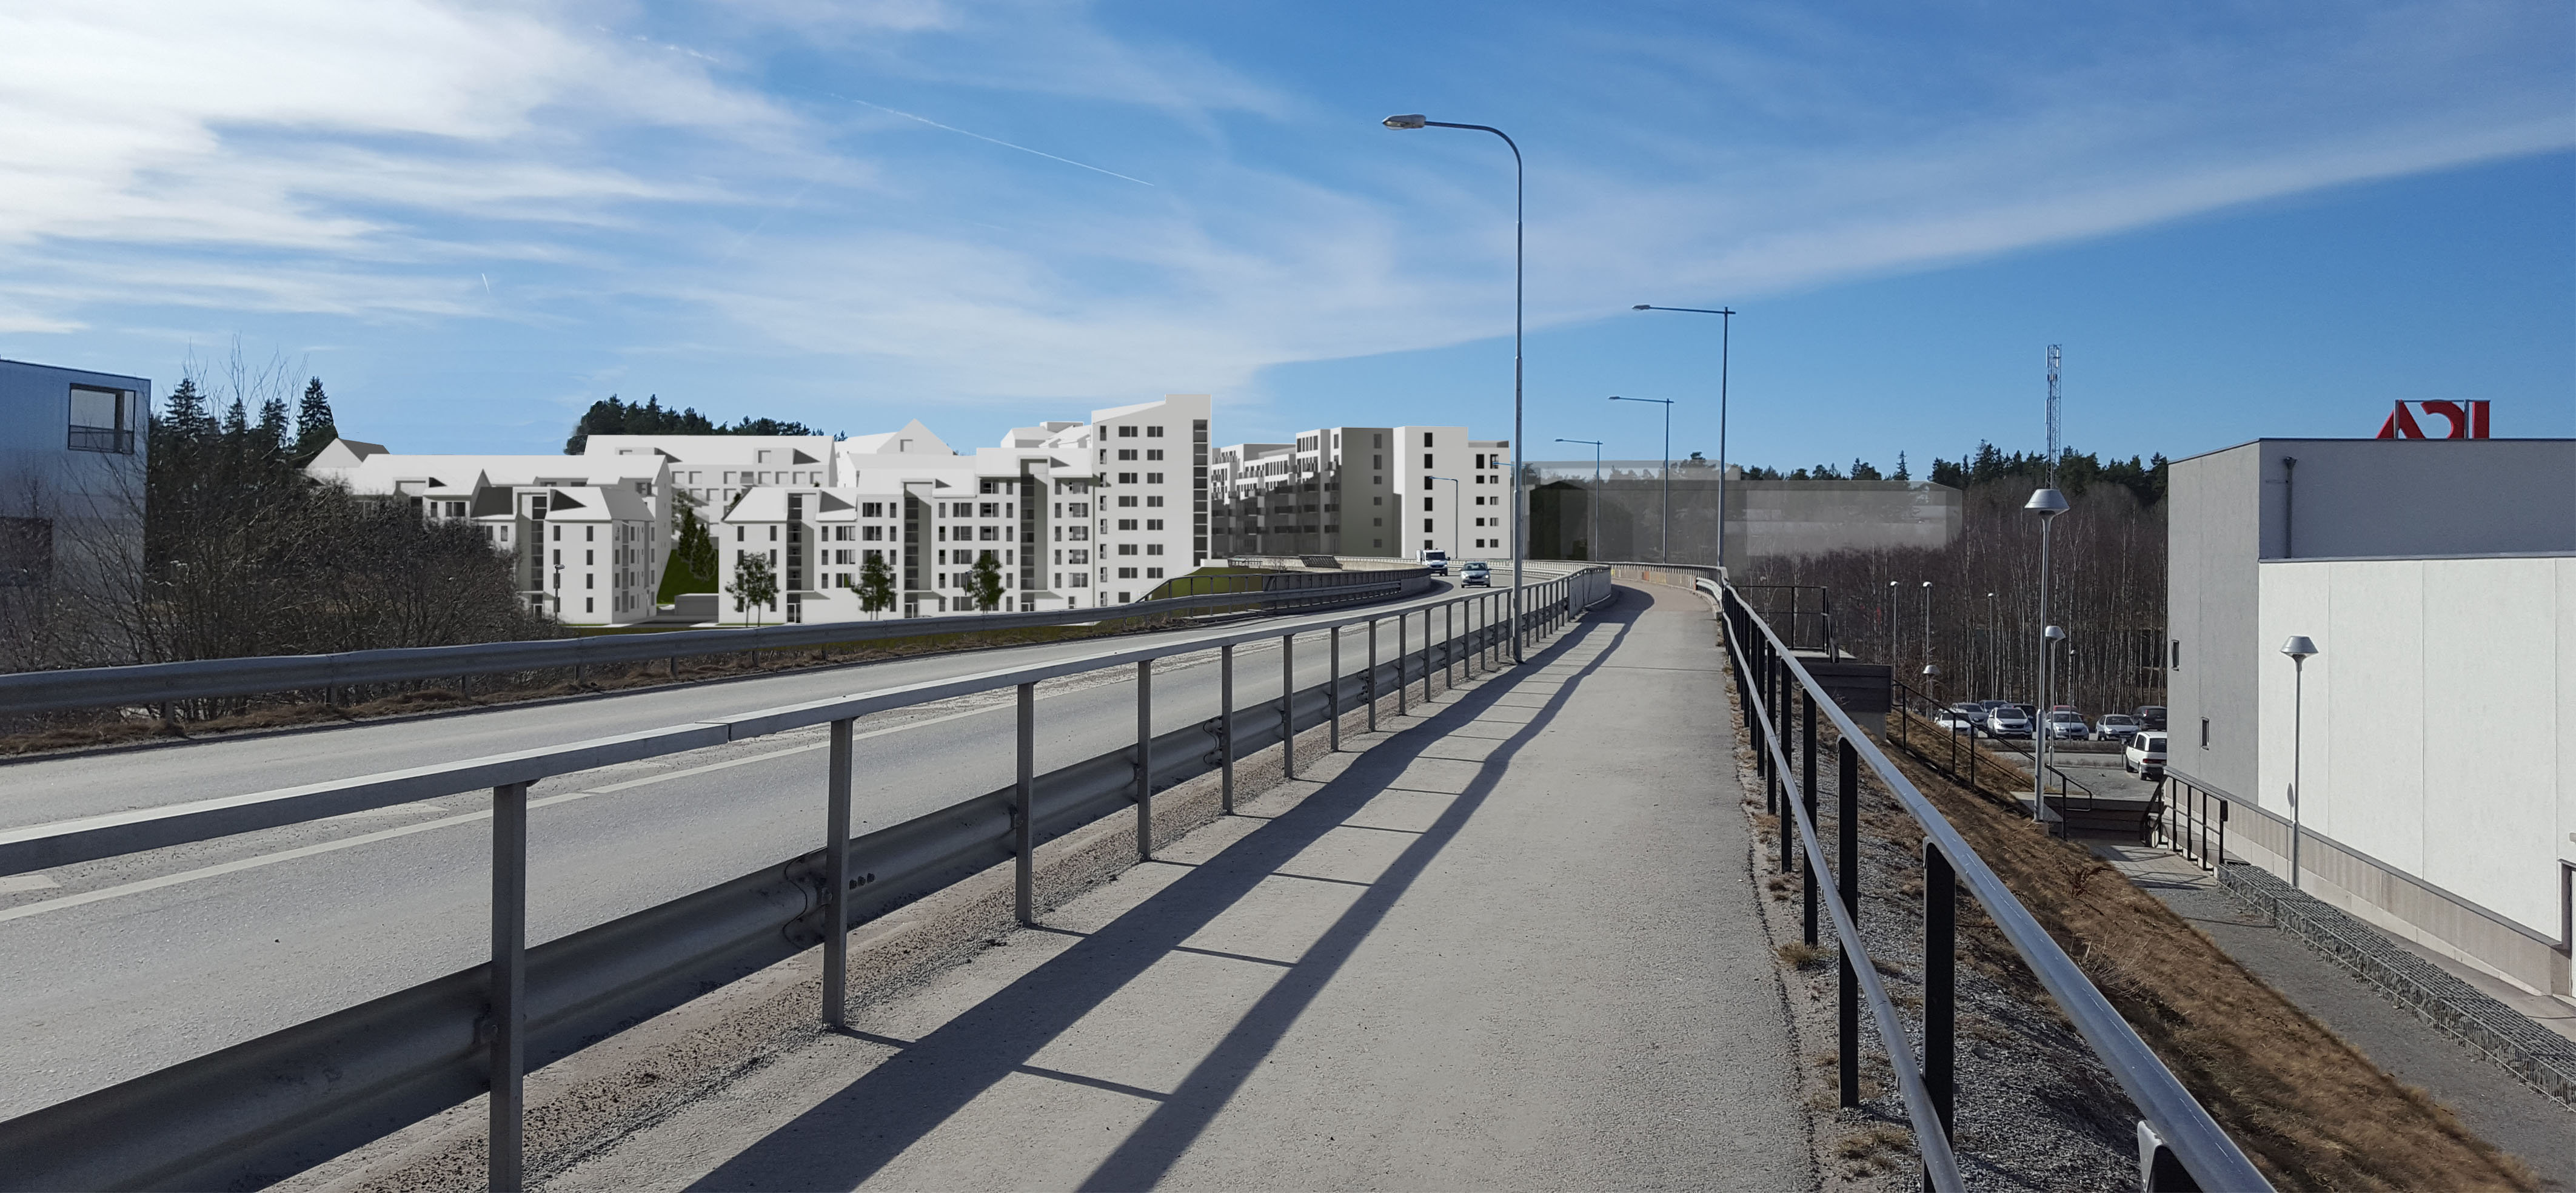 Exempelvy från bro Centrala Ängby